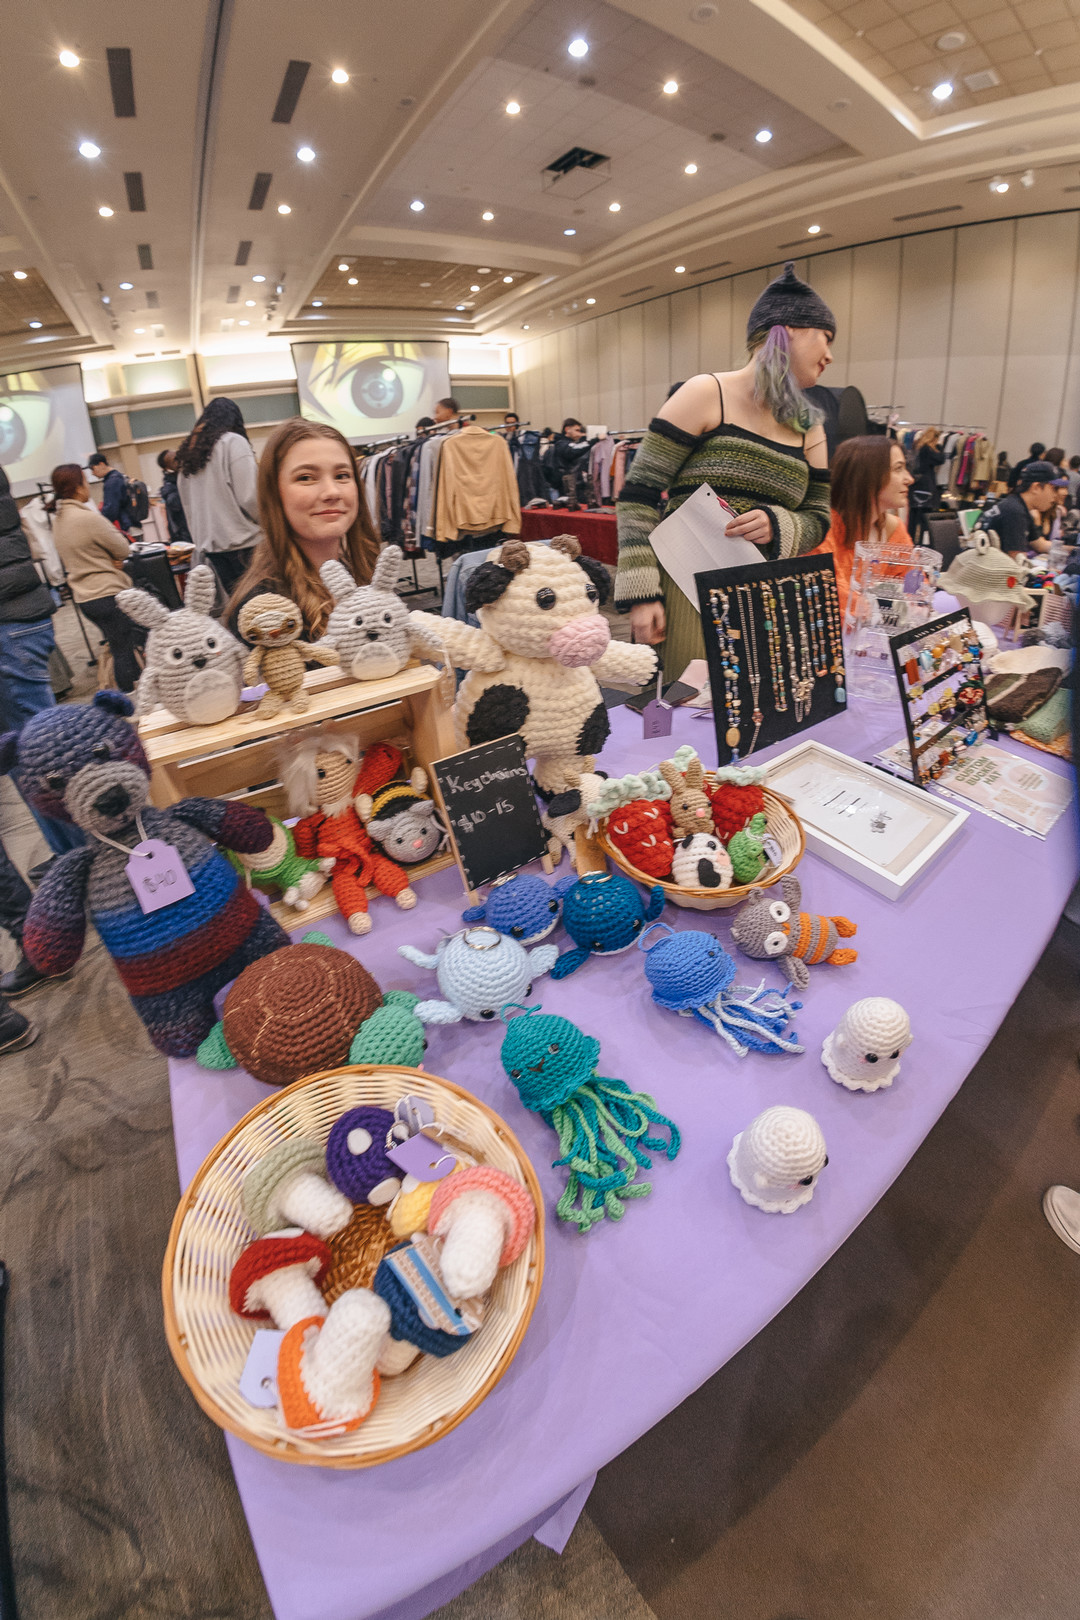 Student vendor sells crochet gifts